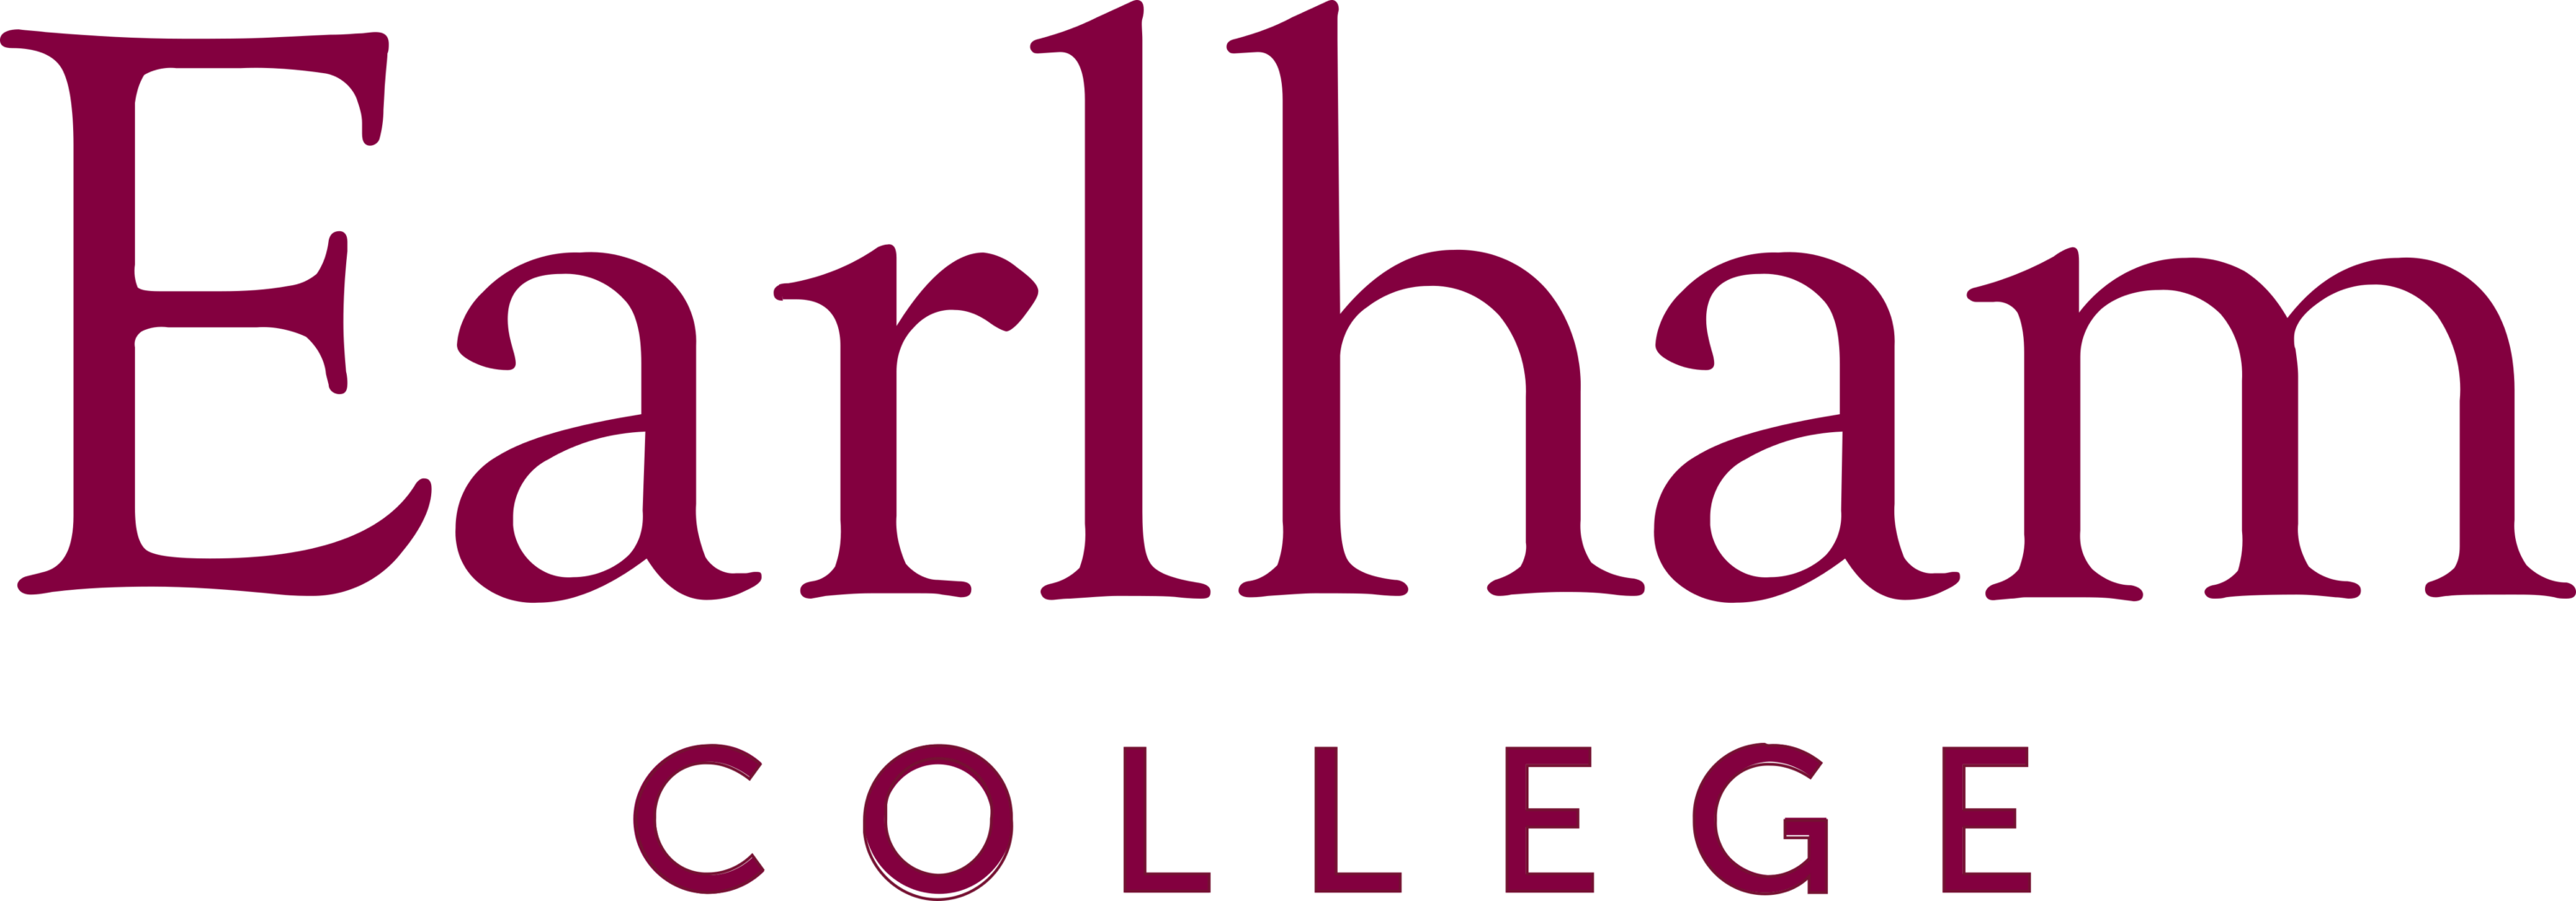 Earlham College Logo